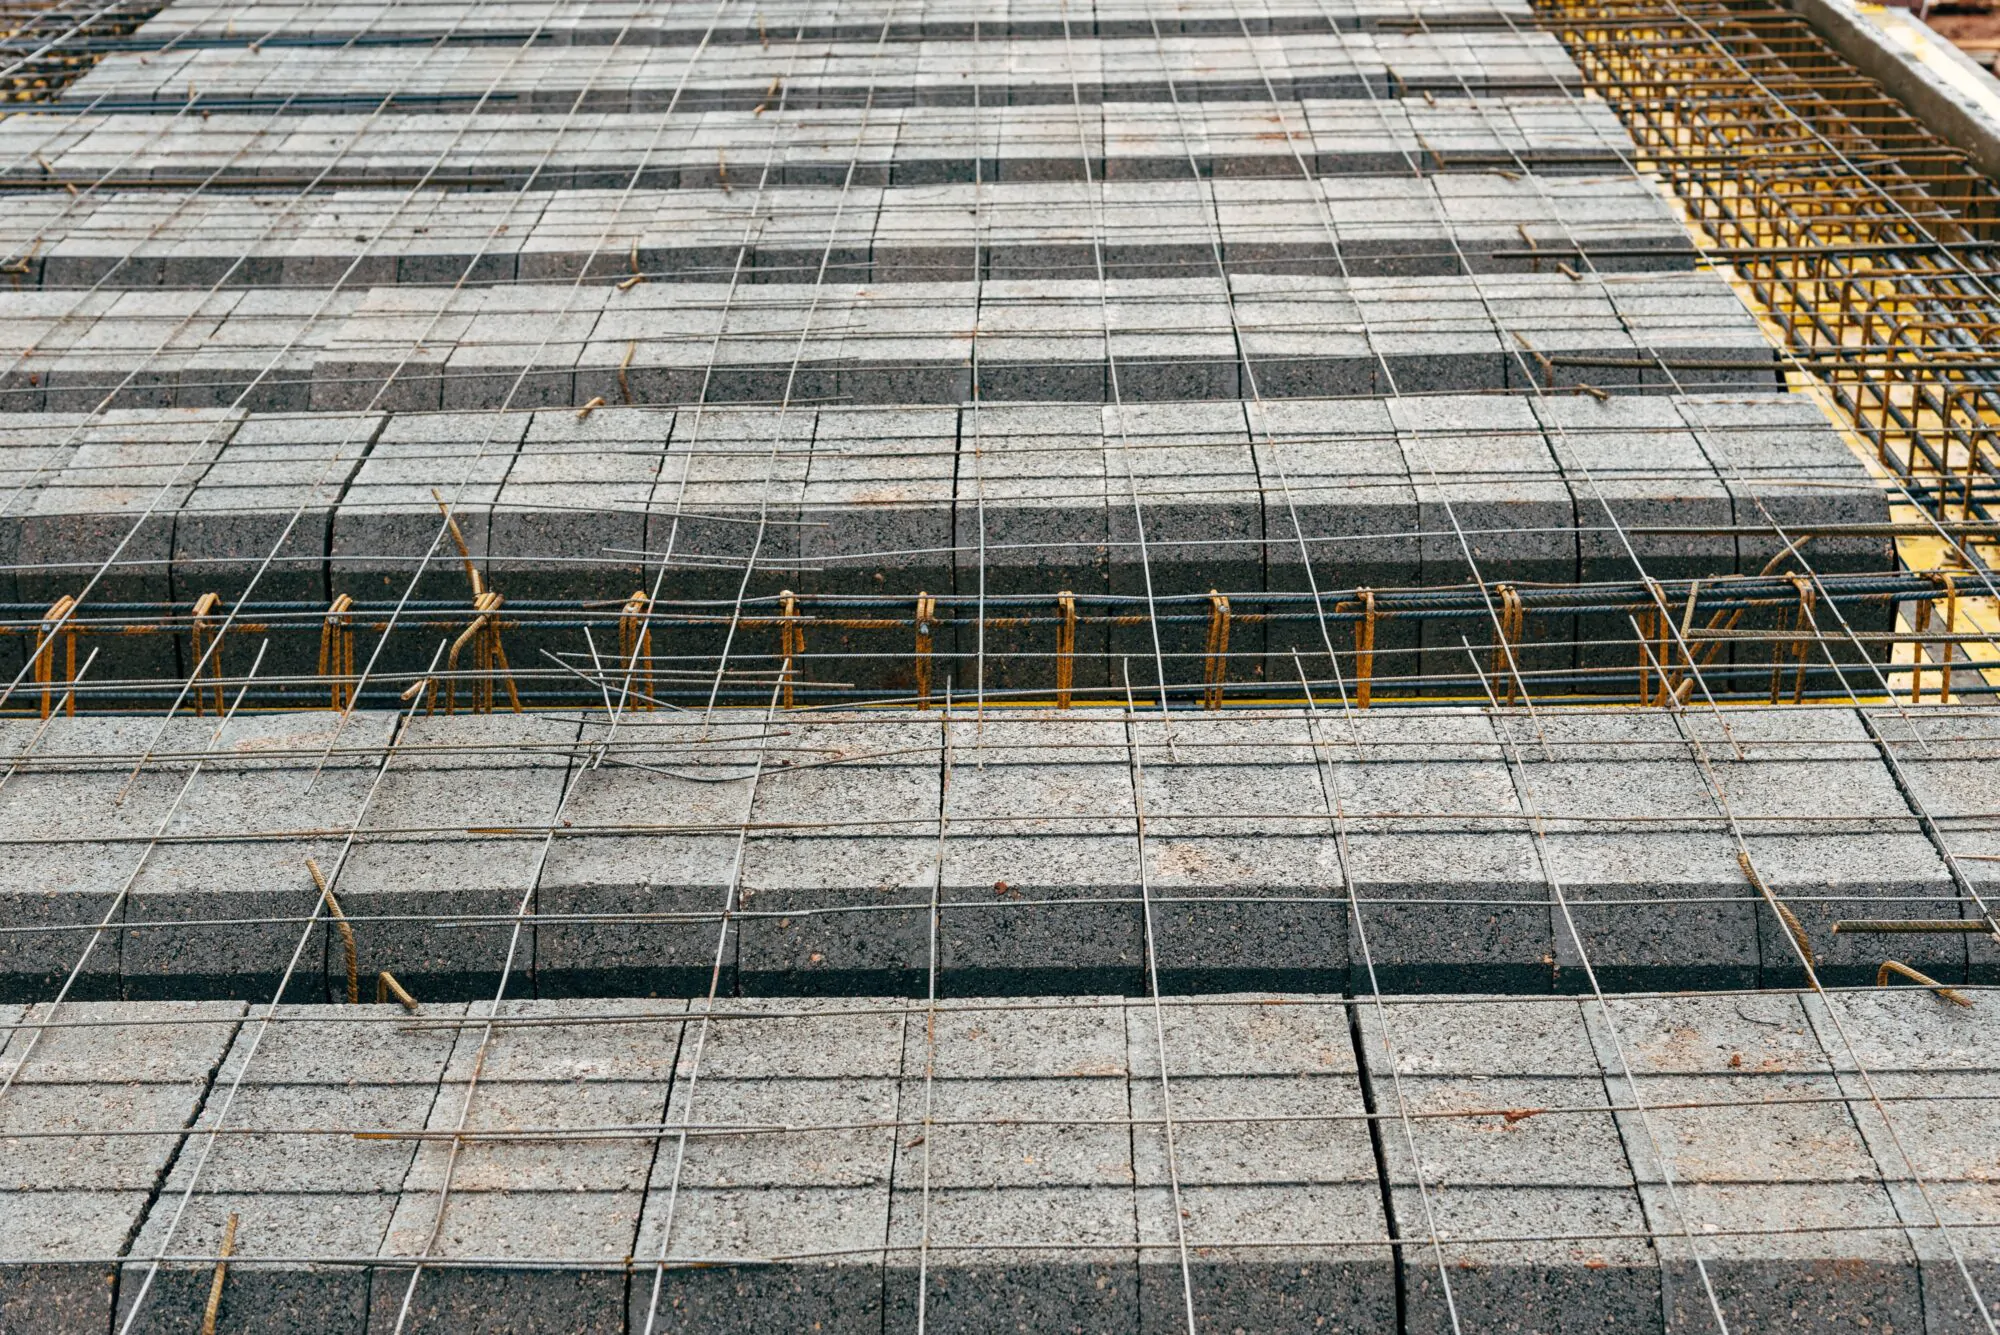 Detail of reinforced concrete slab under construction